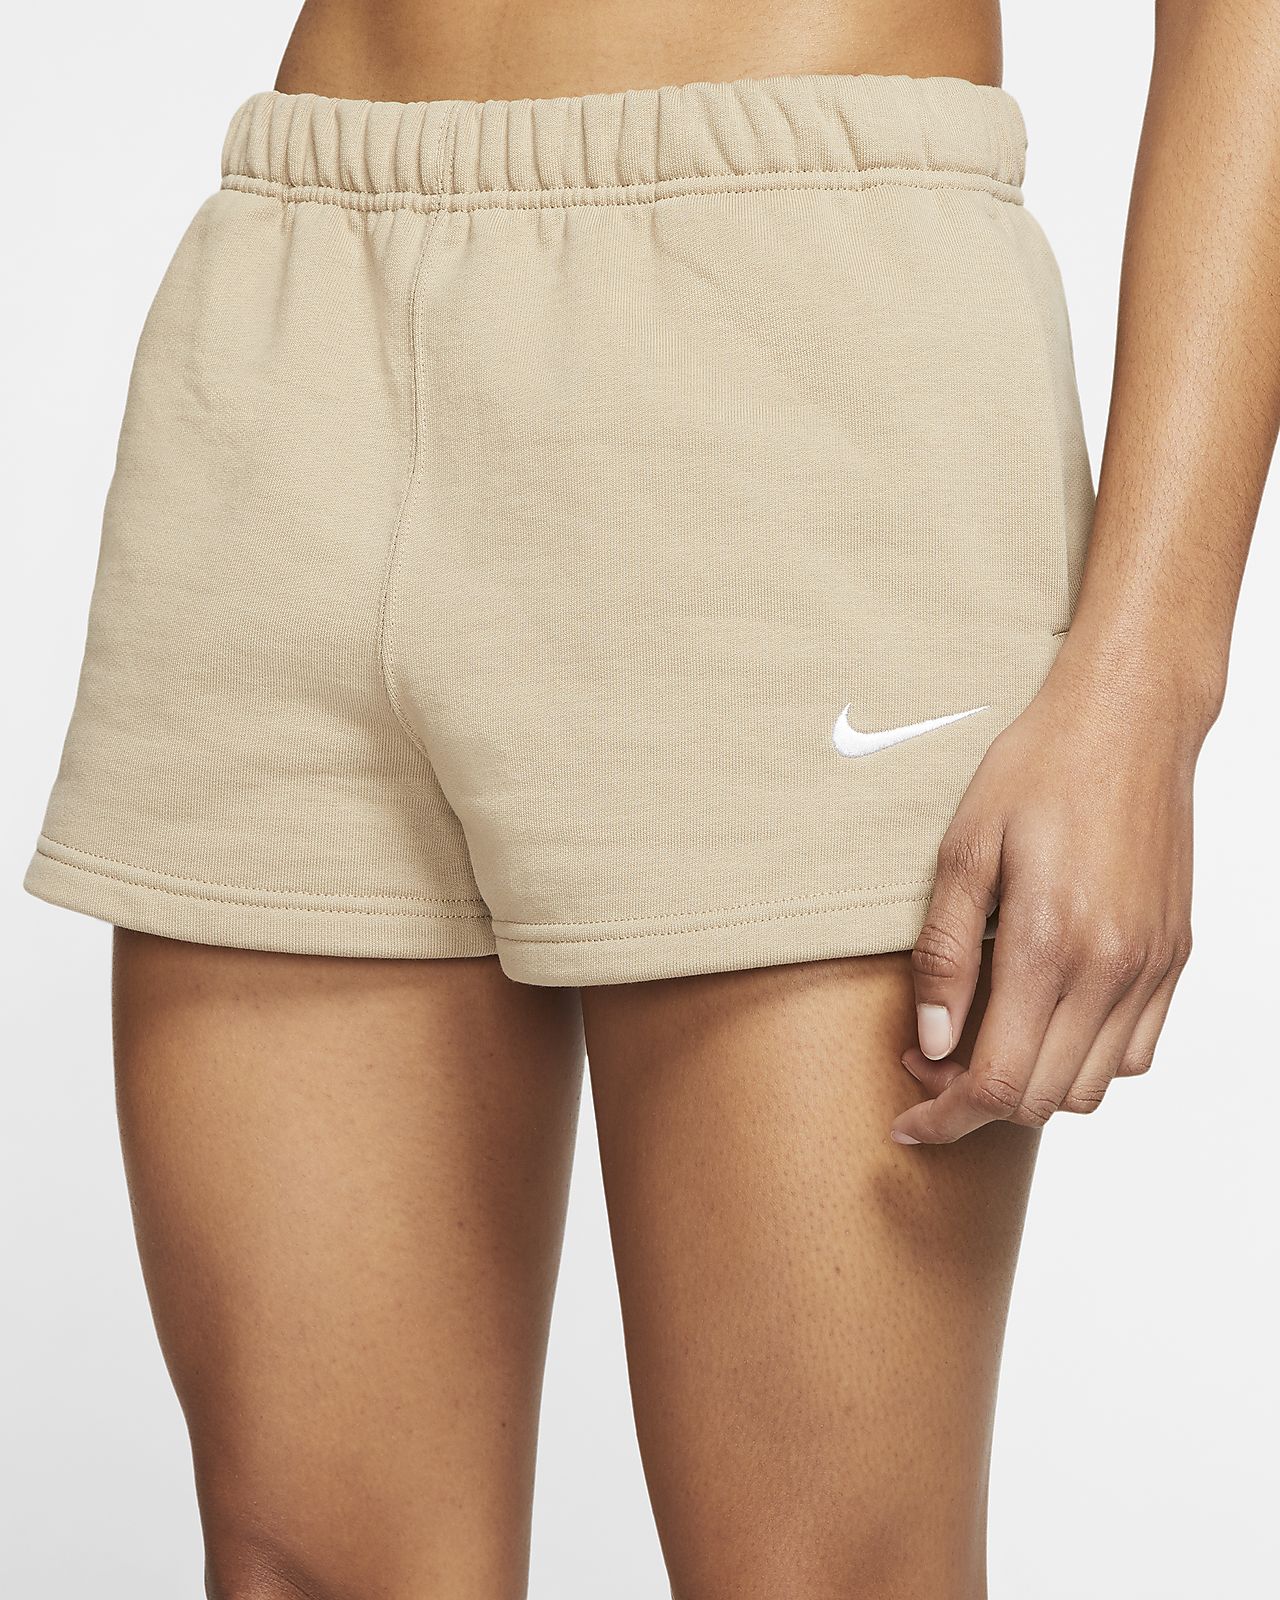 womens new nike shorts